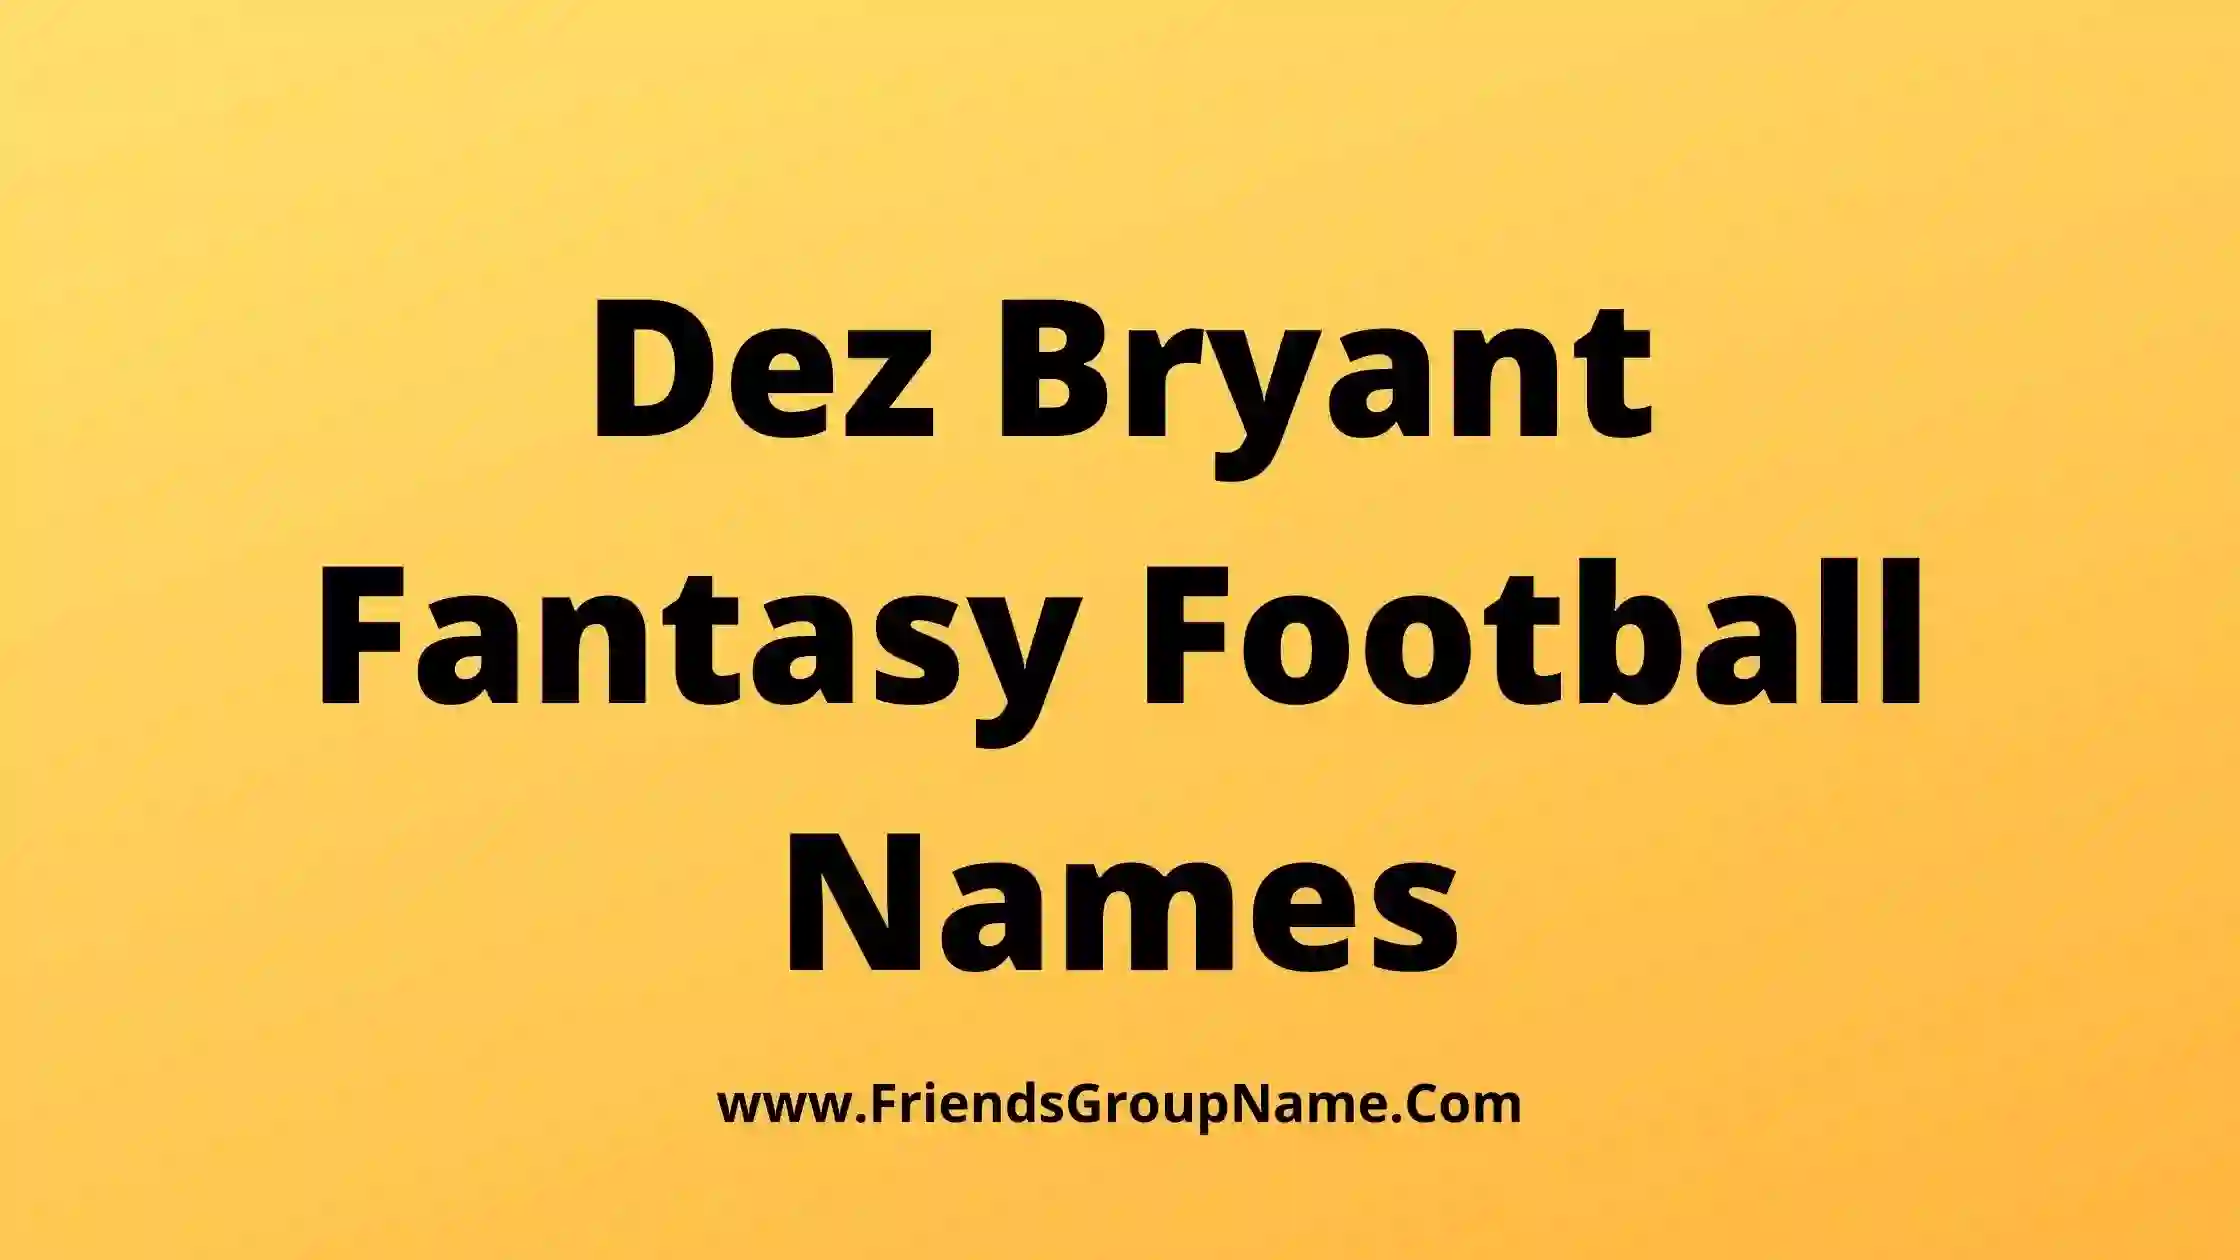 Dez Bryant Fantasy Football Names